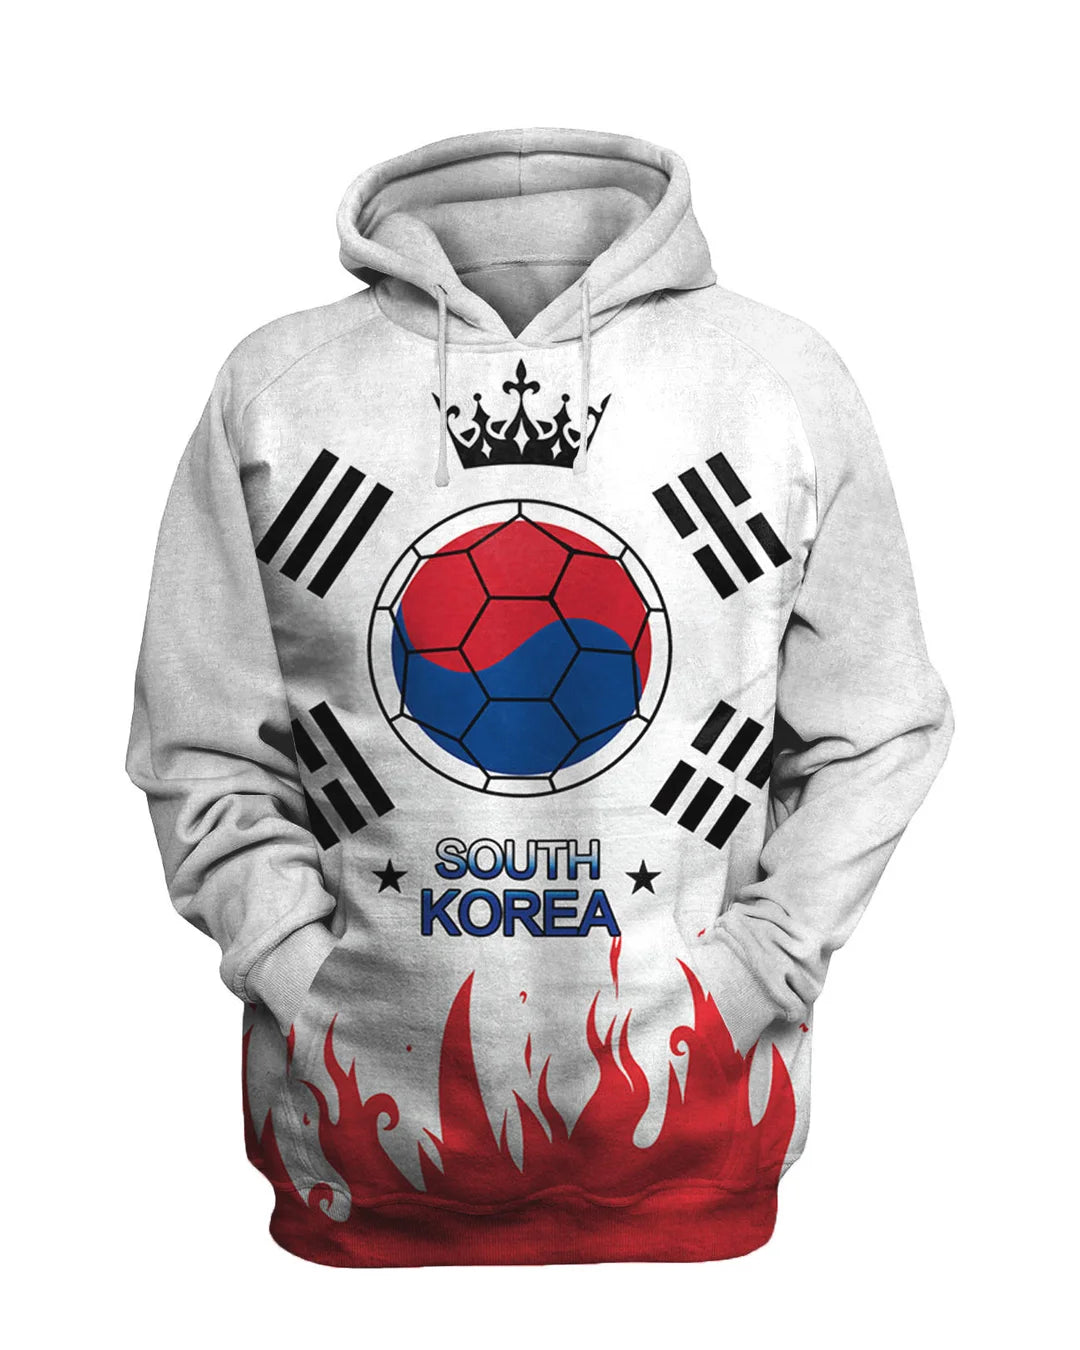 Republic of Korea Printed Sweatshirt Set - DUVAL